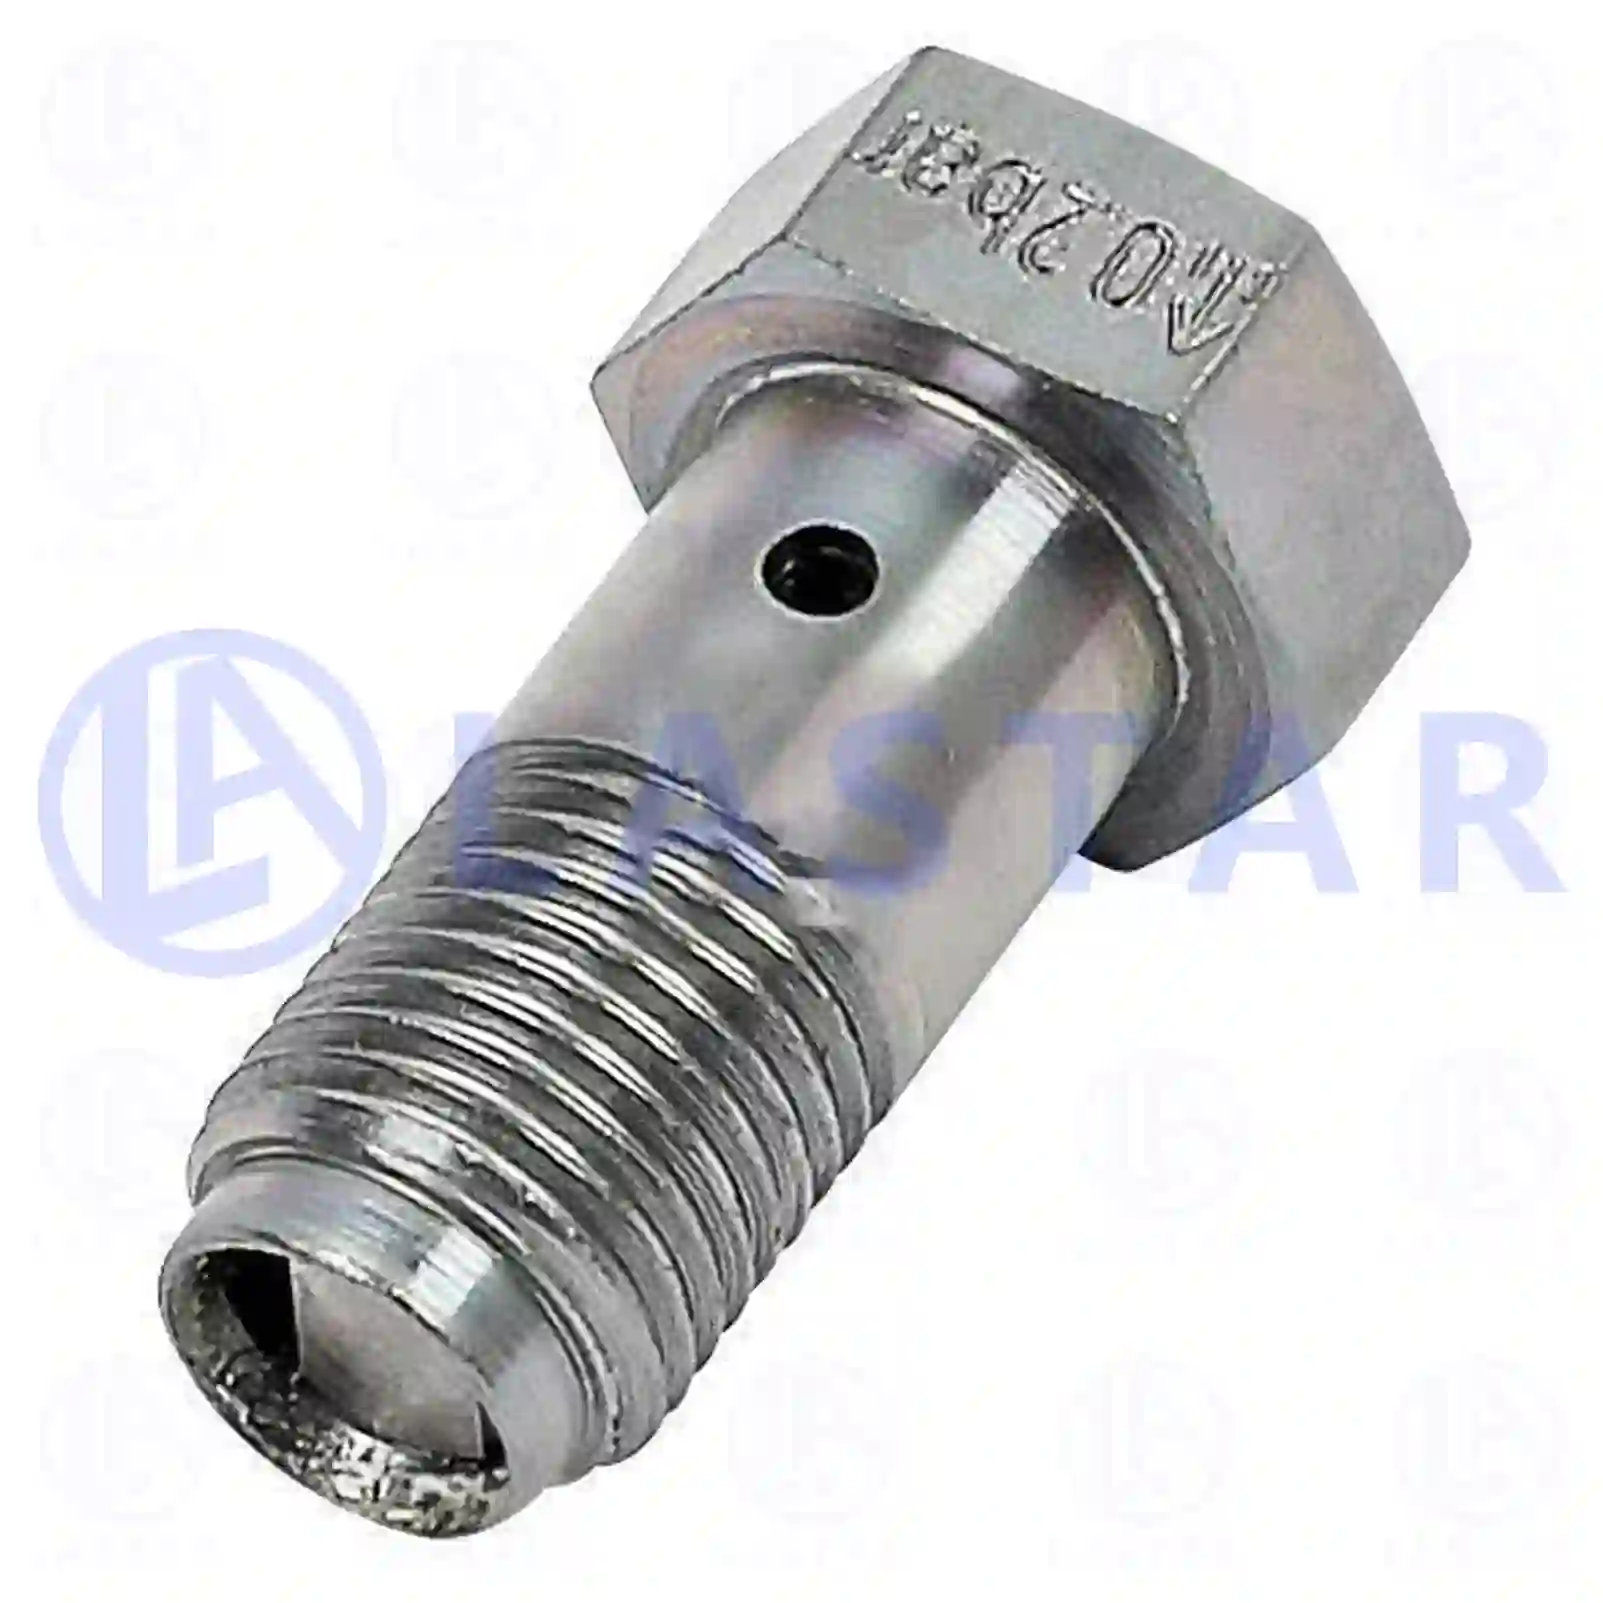 Exhaust Manifold Relief valve, la no: 77702852 ,  oem no:1332556 Lastar Spare Part | Truck Spare Parts, Auotomotive Spare Parts